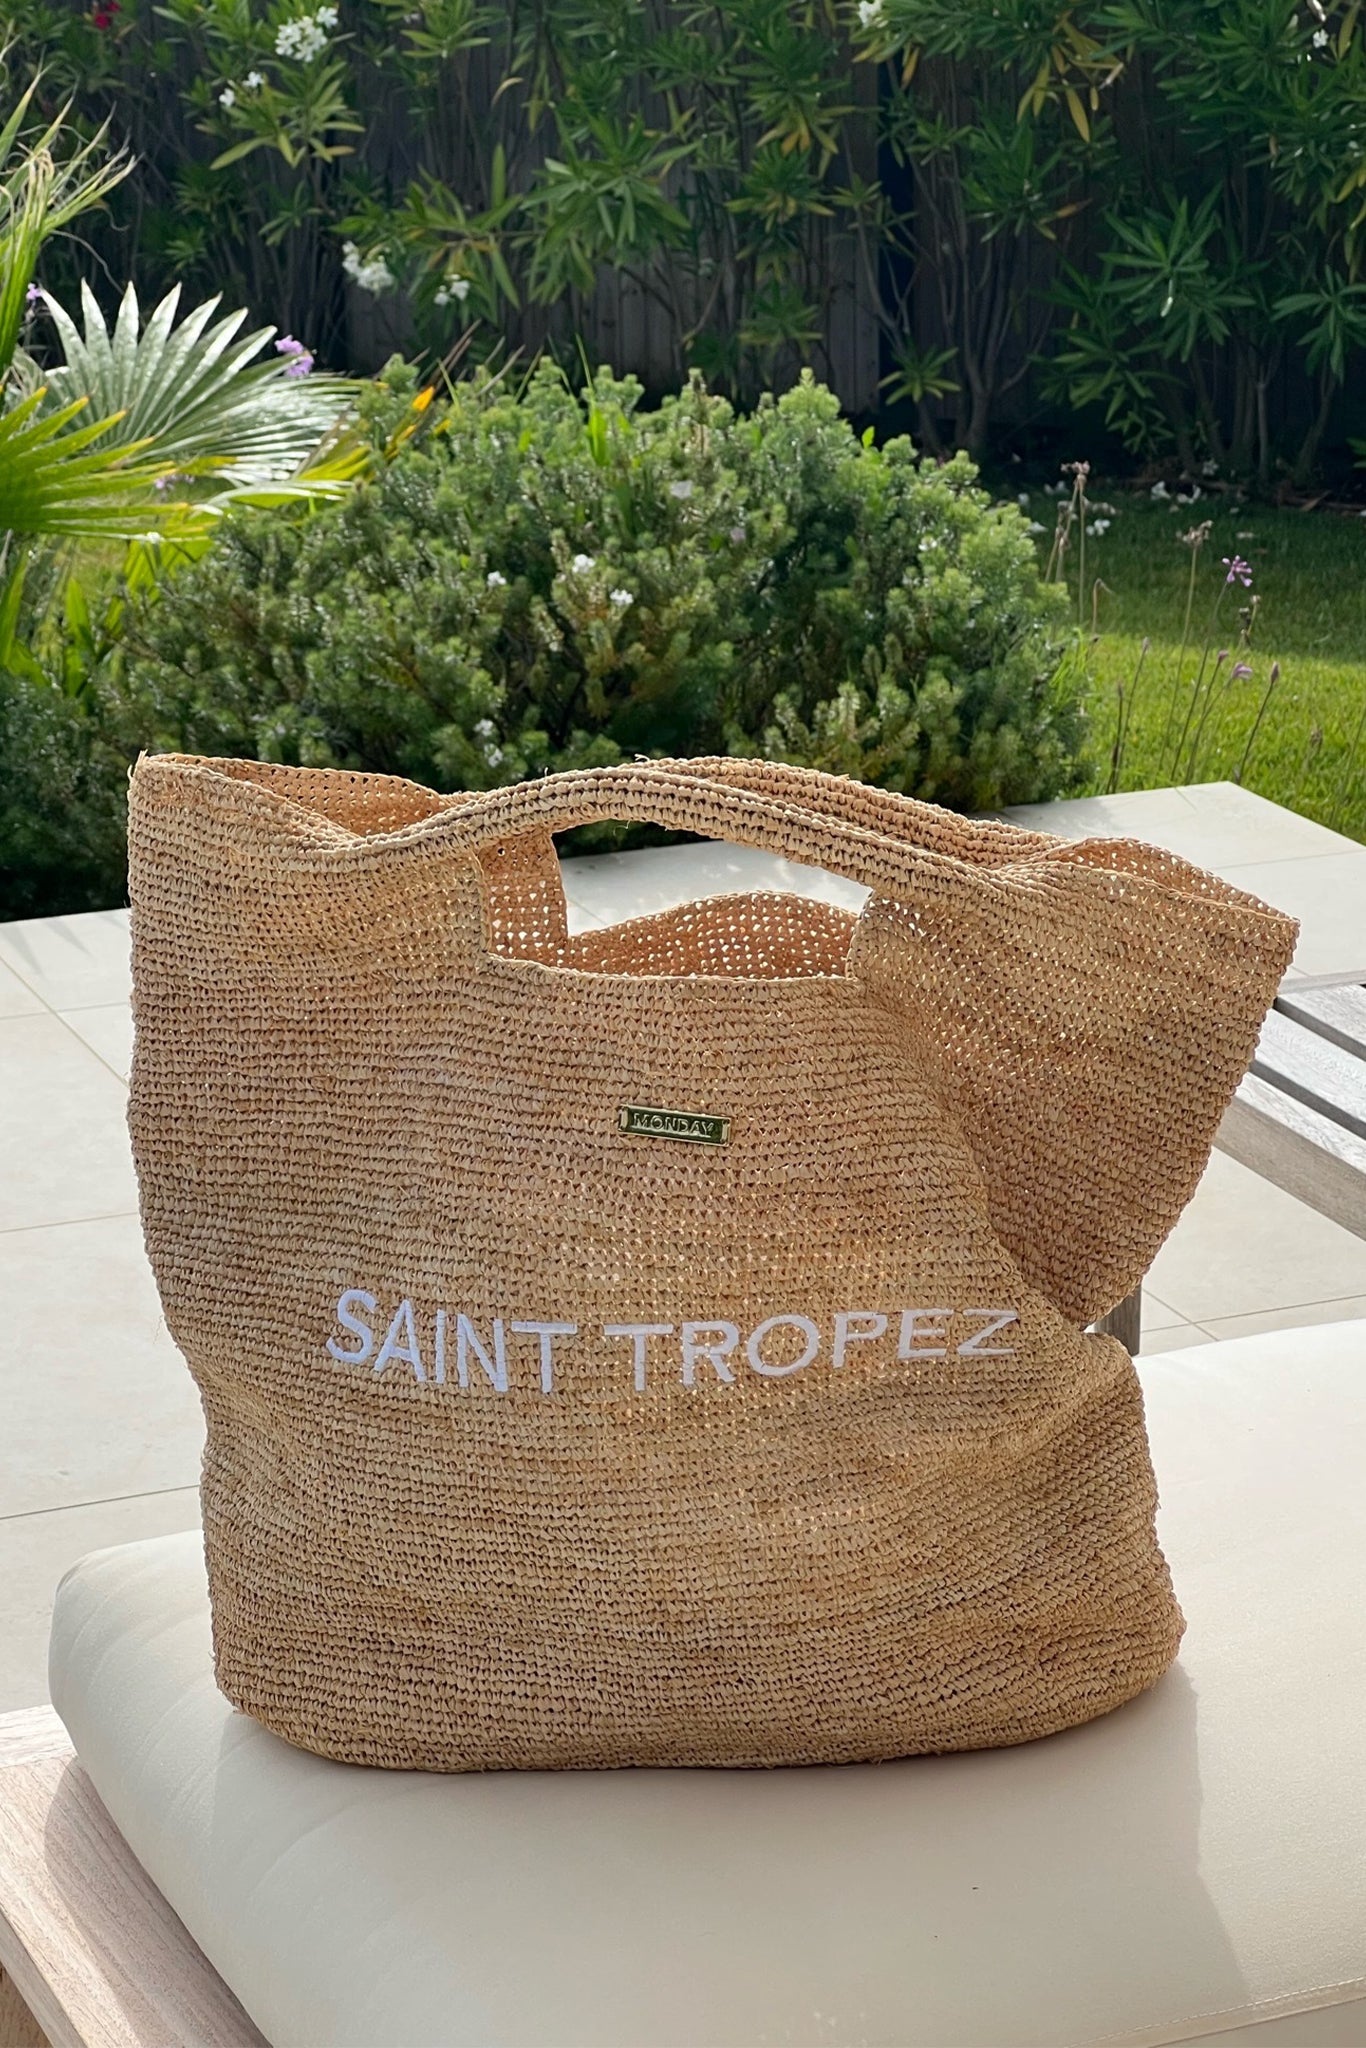 Saint-Tropez Sandy Bag